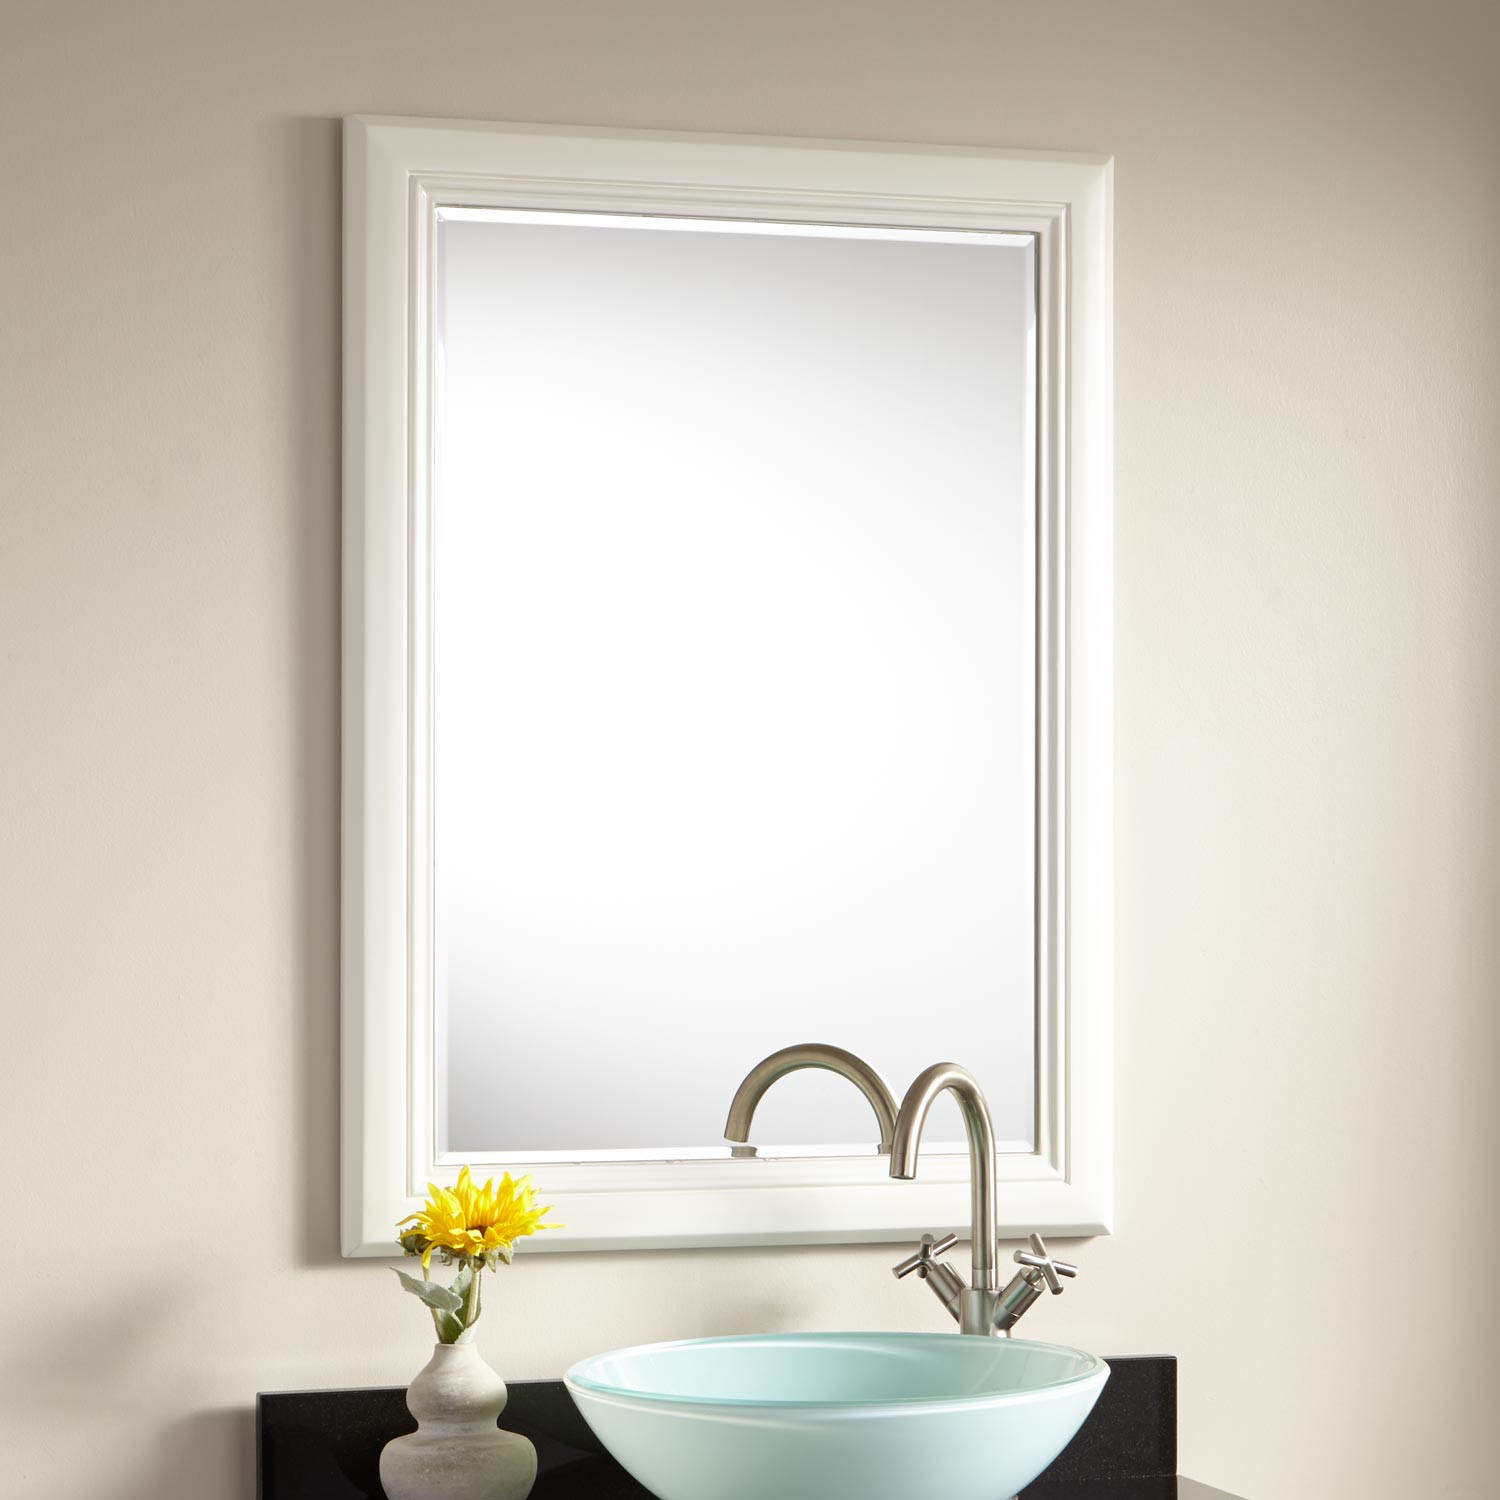 Bathroom Vanity And Mirror
 26" Chapman Vanity Mirror White Bathroom